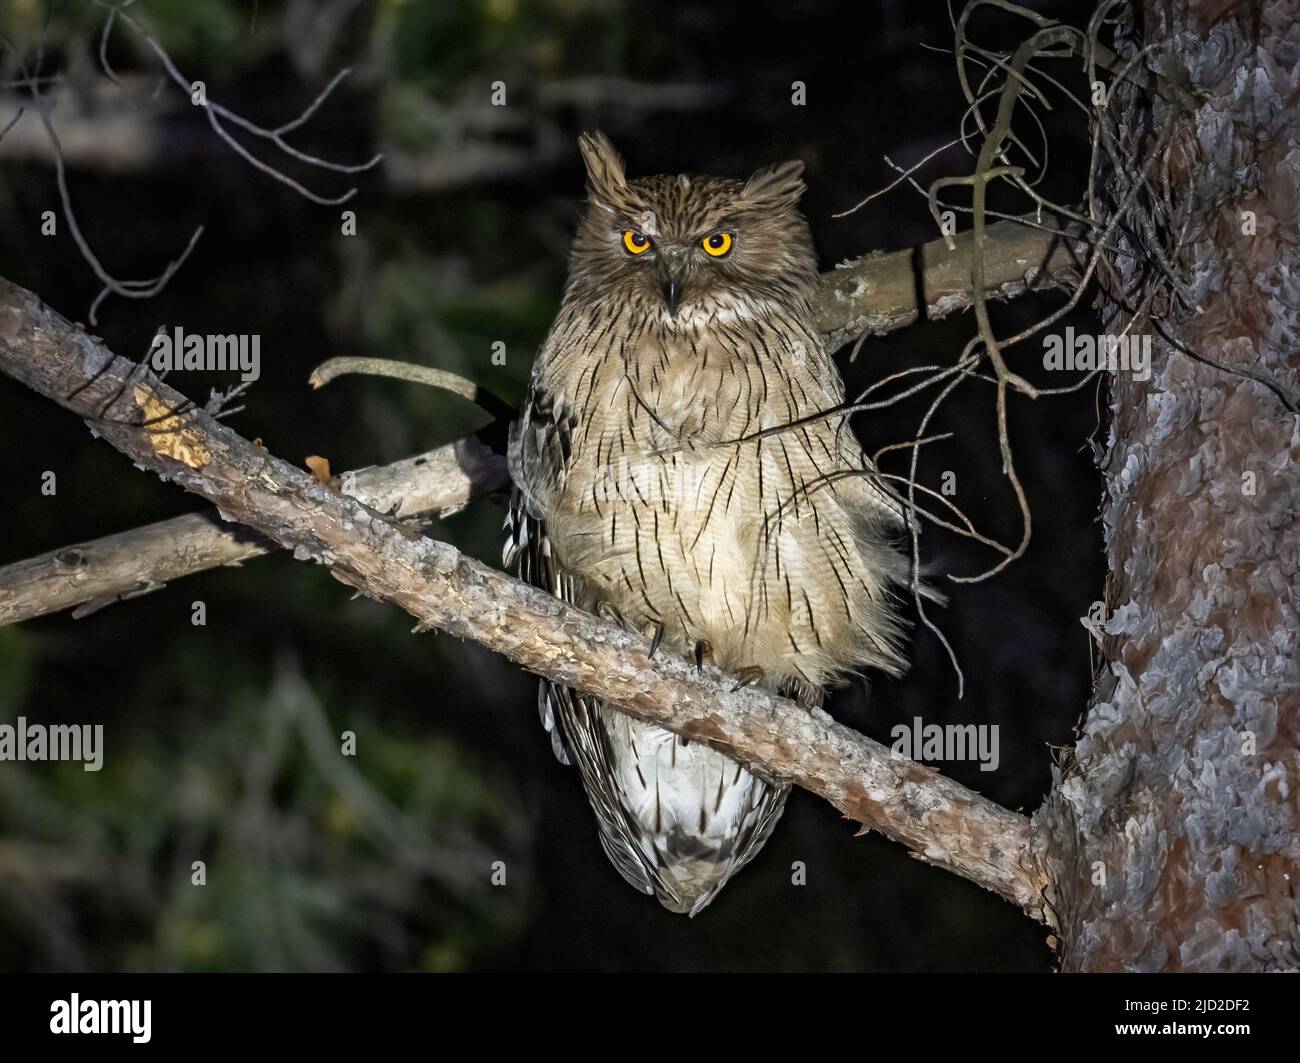 A Brown Fish-Owl (Ketupa zeylonensis) perched on a branch at night. Antalya, Türkiye. Stock Photo